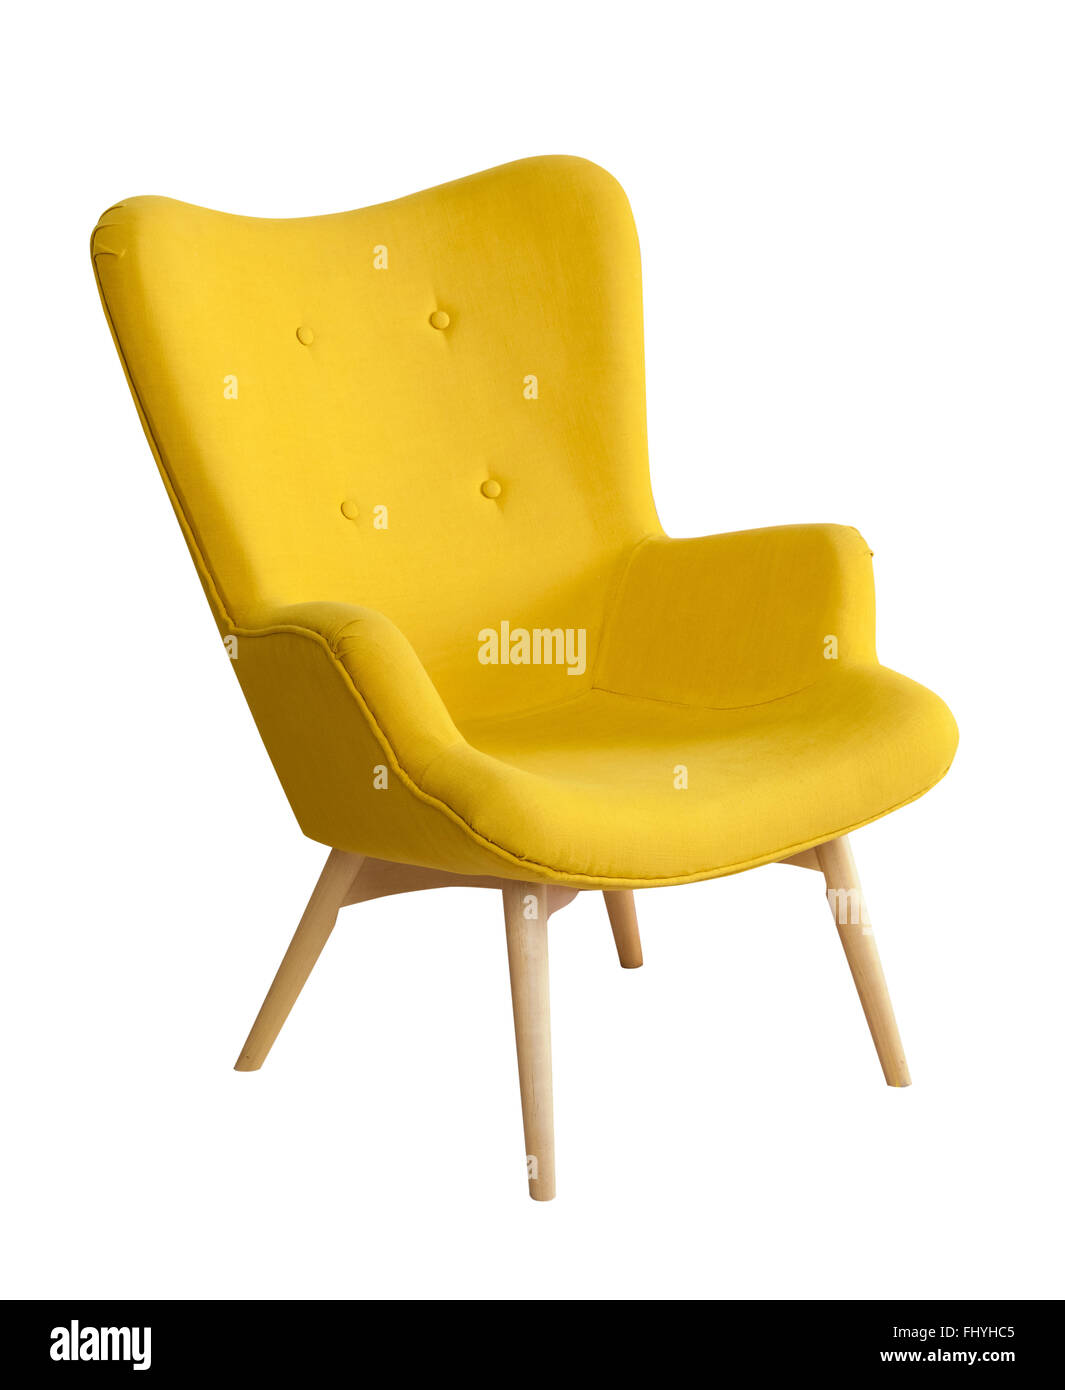 Yellow modern chair Stock Photo